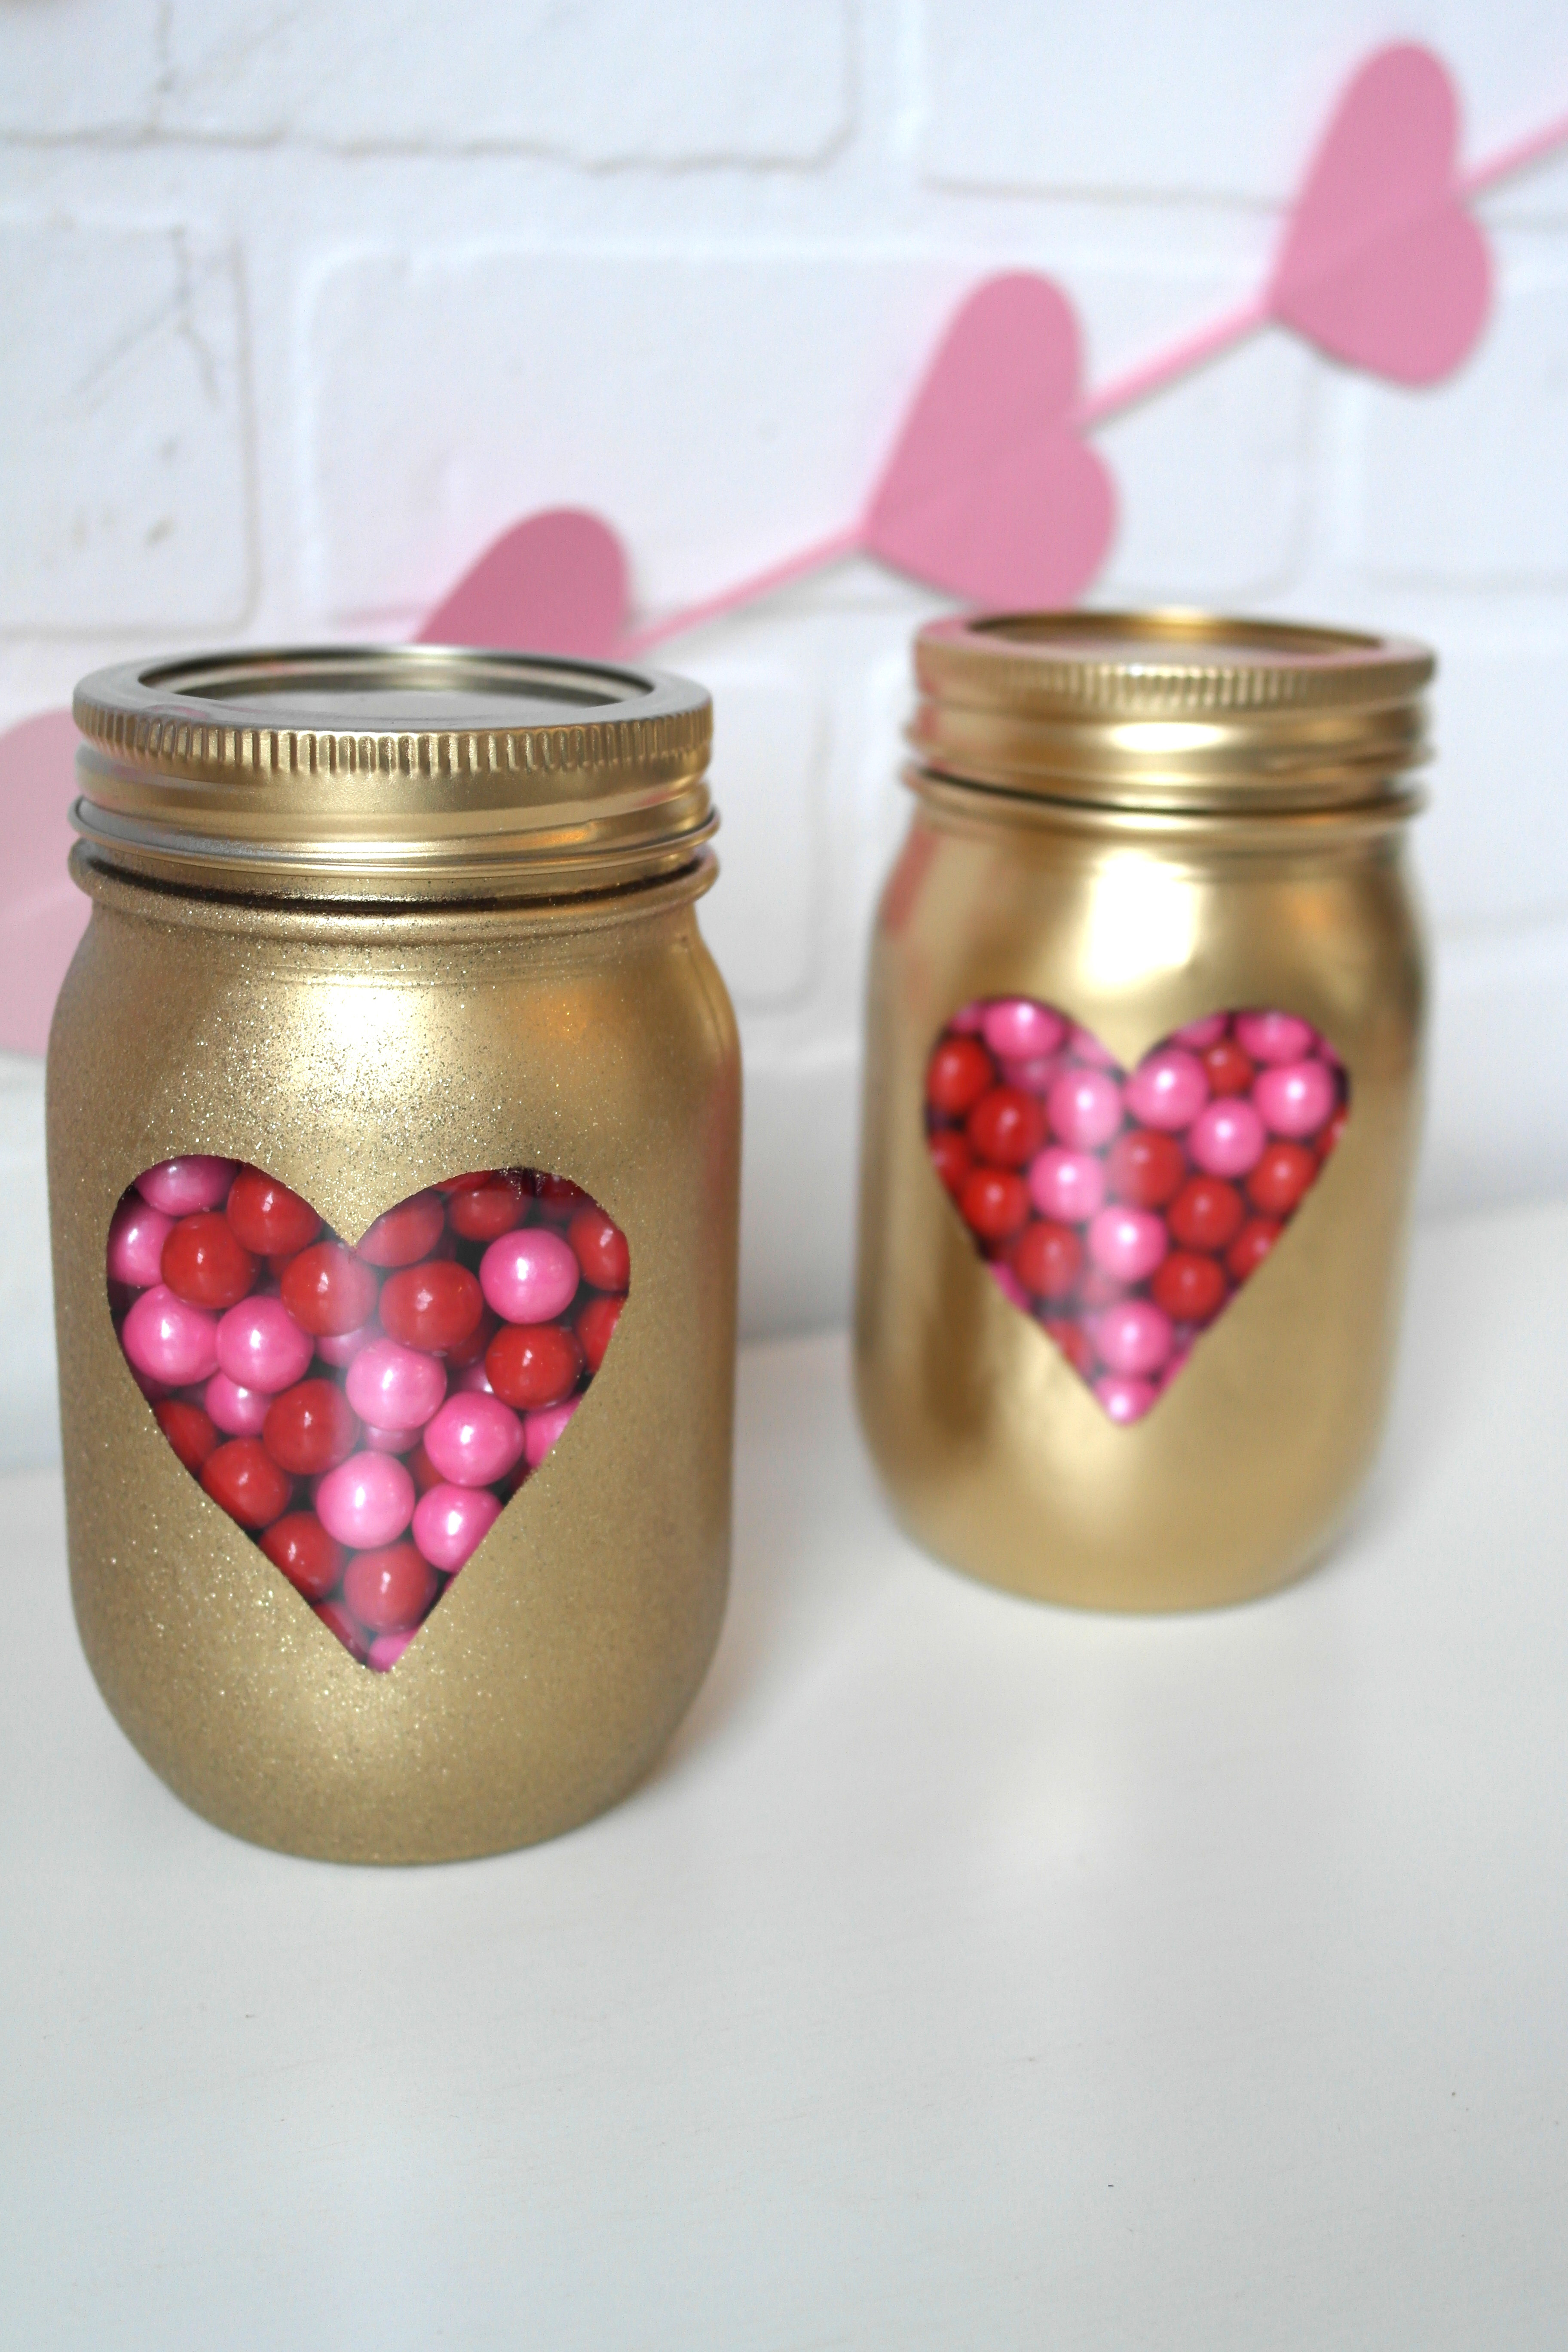 Best ideas about DIY Mason Jar
. Save or Pin DIY Valentine s Day Mason Jars Now.